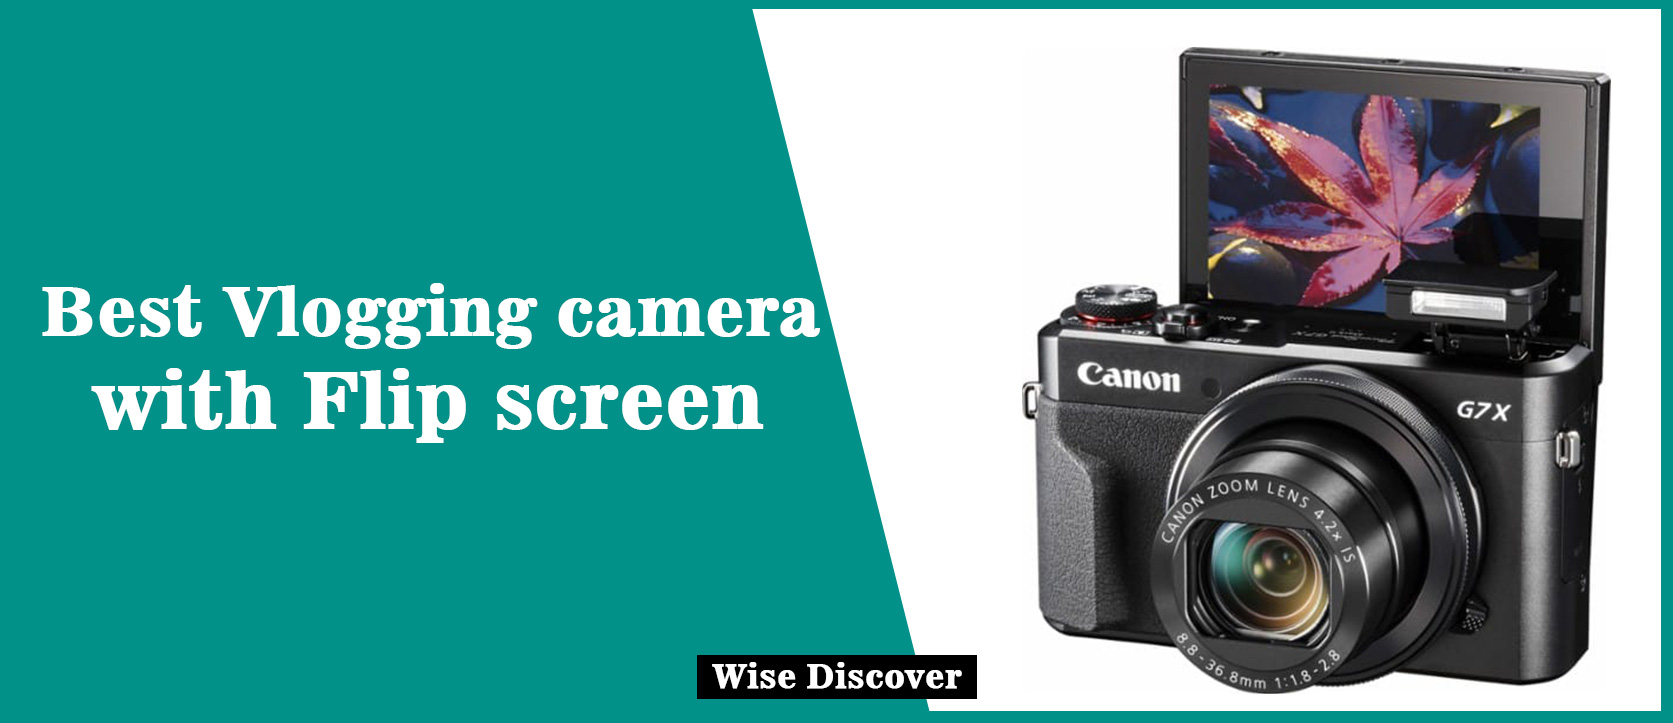 Vlogging camera with Flip screen